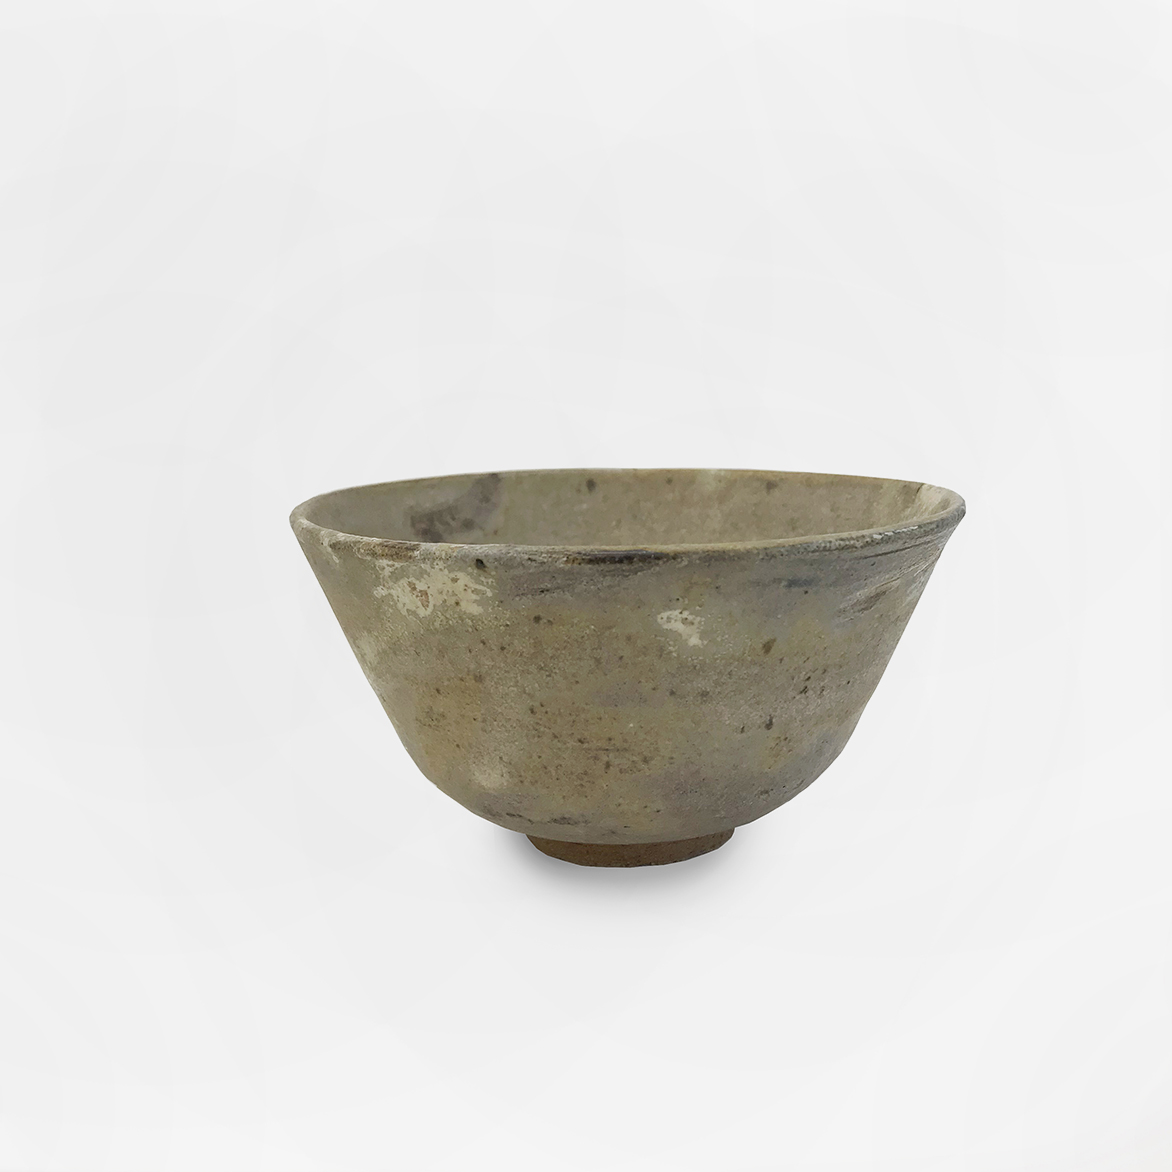 Shawan | Shoji Hamada | Ceramic | Mashiko, Japan | before 1940 | basedonart gallery